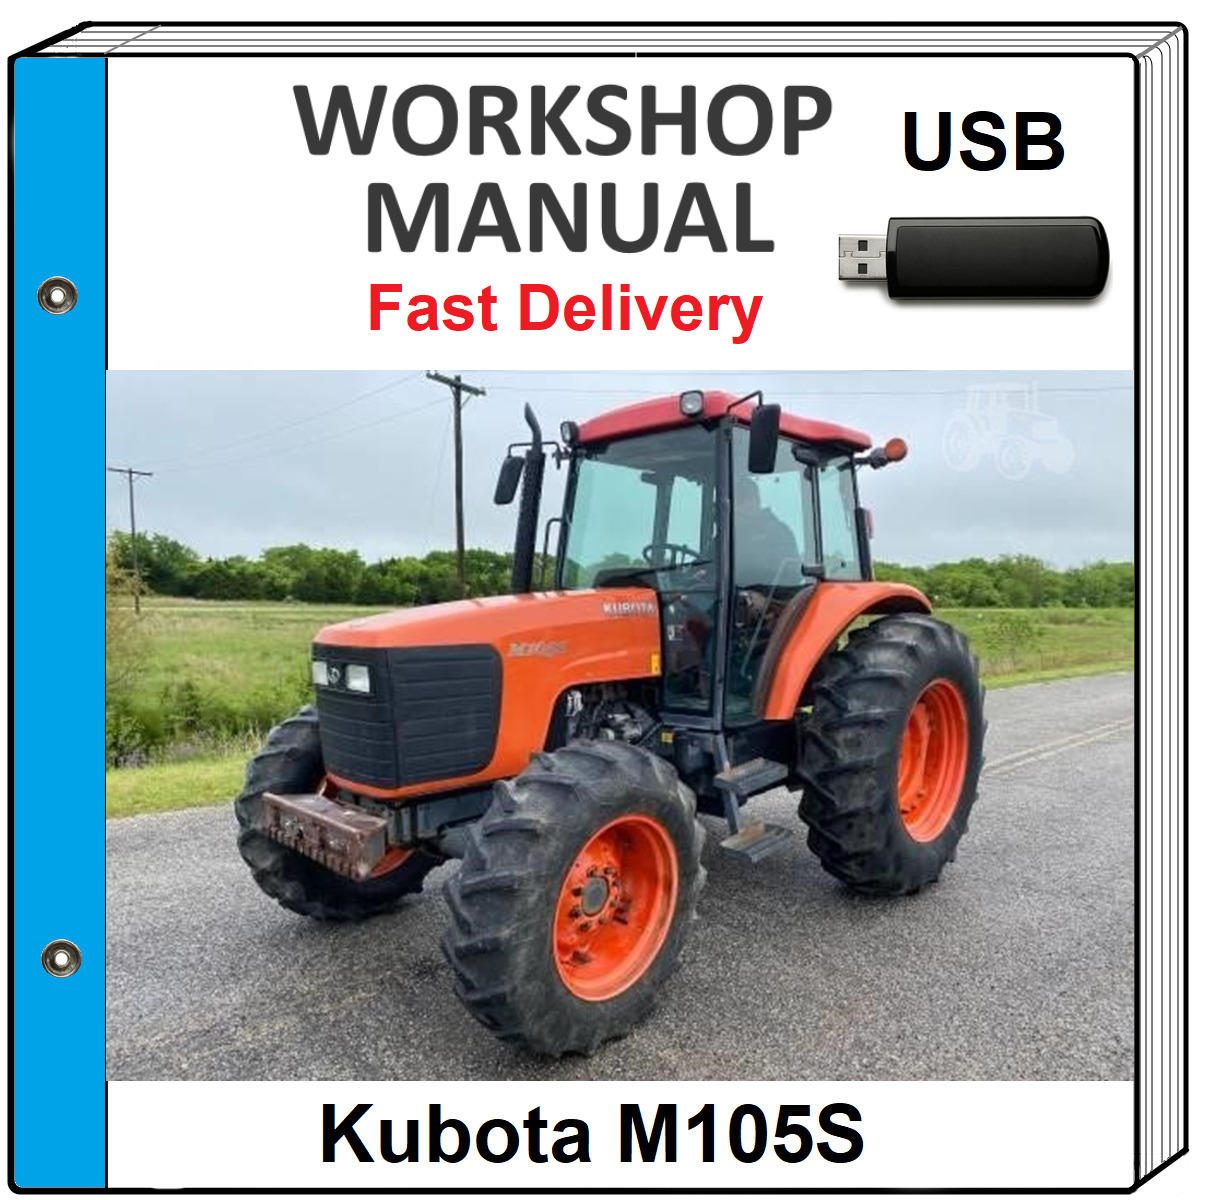 KUBOTA M105S M105 S TRACTOR SERVICE REPAIR WORKSHOP MANUAL ON USB